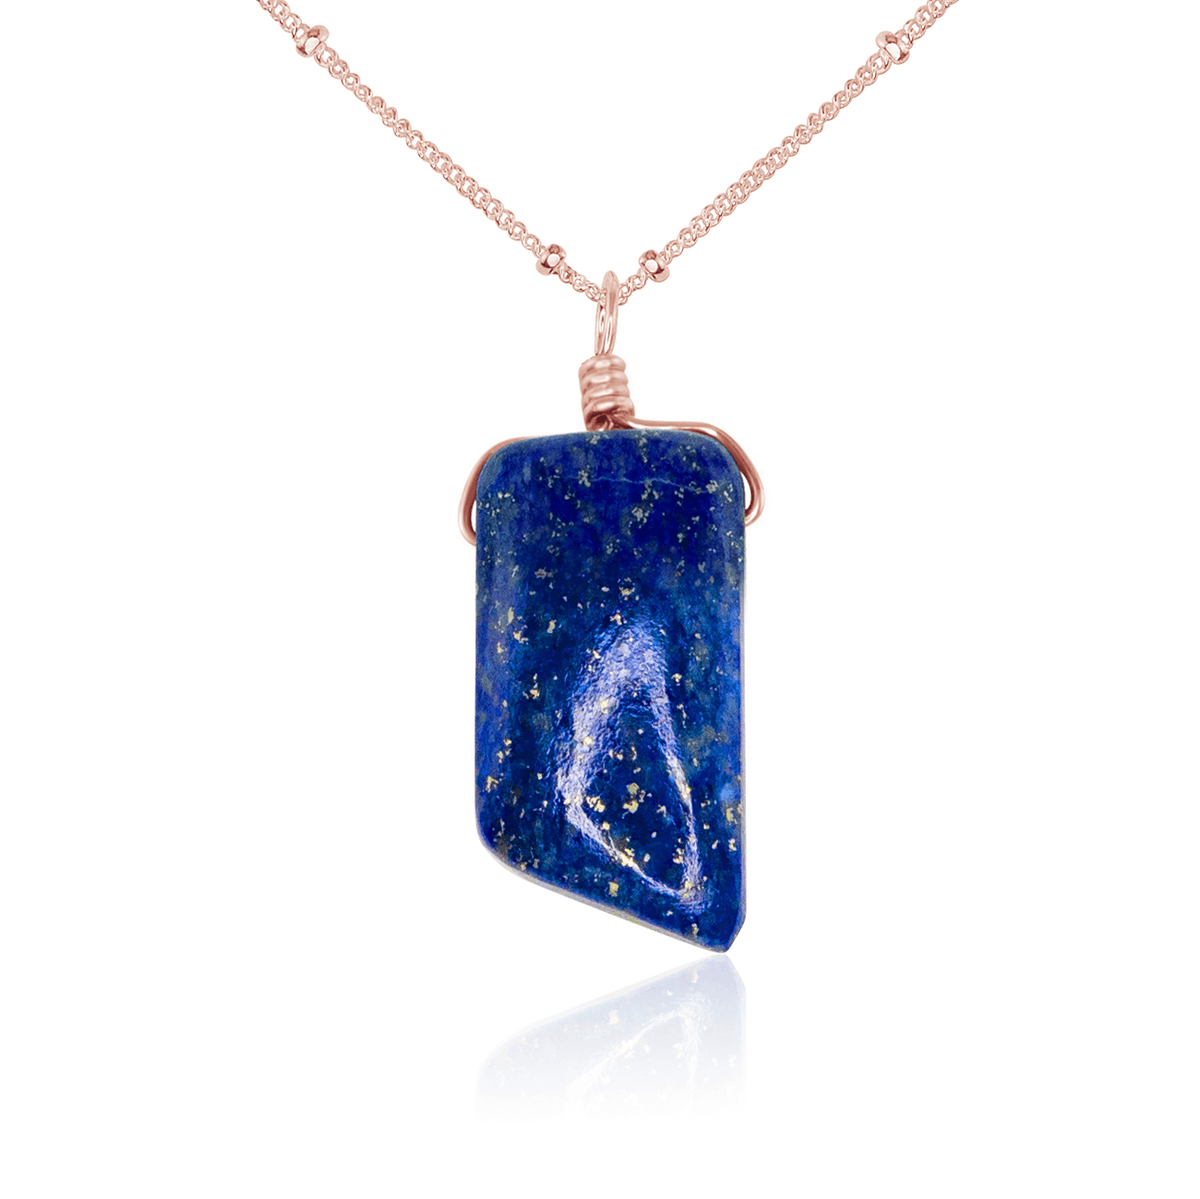 Small Smooth Lapis Lazuli Gentle Point Crystal Pendant Necklace - Small Smooth Lapis Lazuli Gentle Point Crystal Pendant Necklace - 14k Rose Gold Fill / Satellite - Luna Tide Handmade Crystal Jewellery